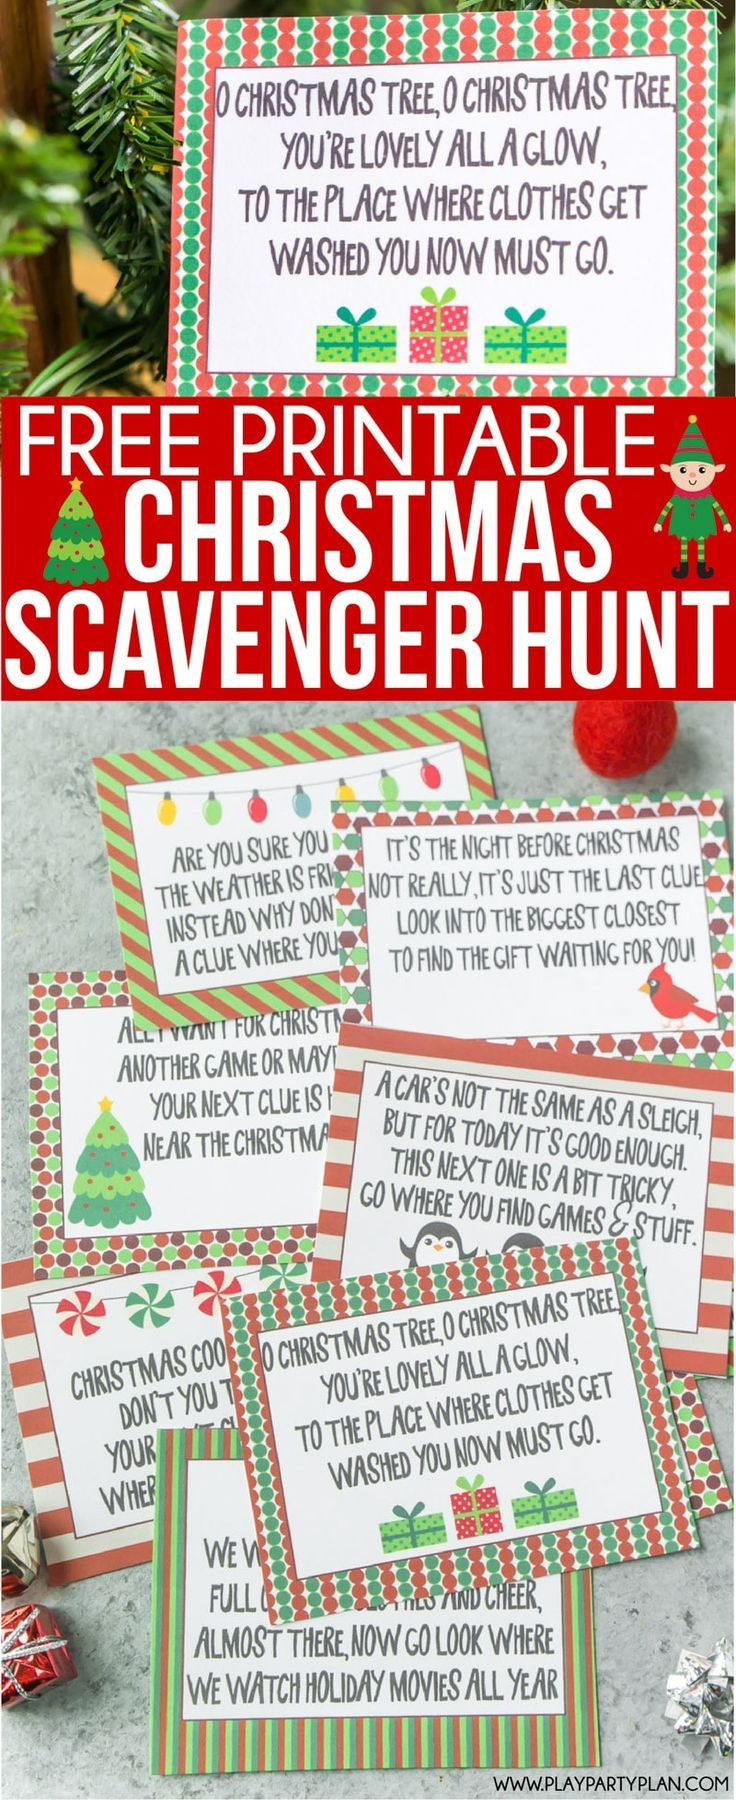 Free Printable Christmas Scavenger Hunt Clues For Kids Or For Teens - Free Printable Christmas Treasure Hunt Clues